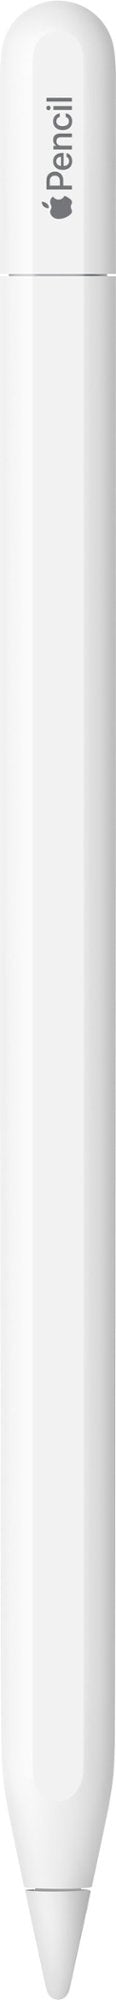 Apple Pencil (USB-C) - White (Refurbished)